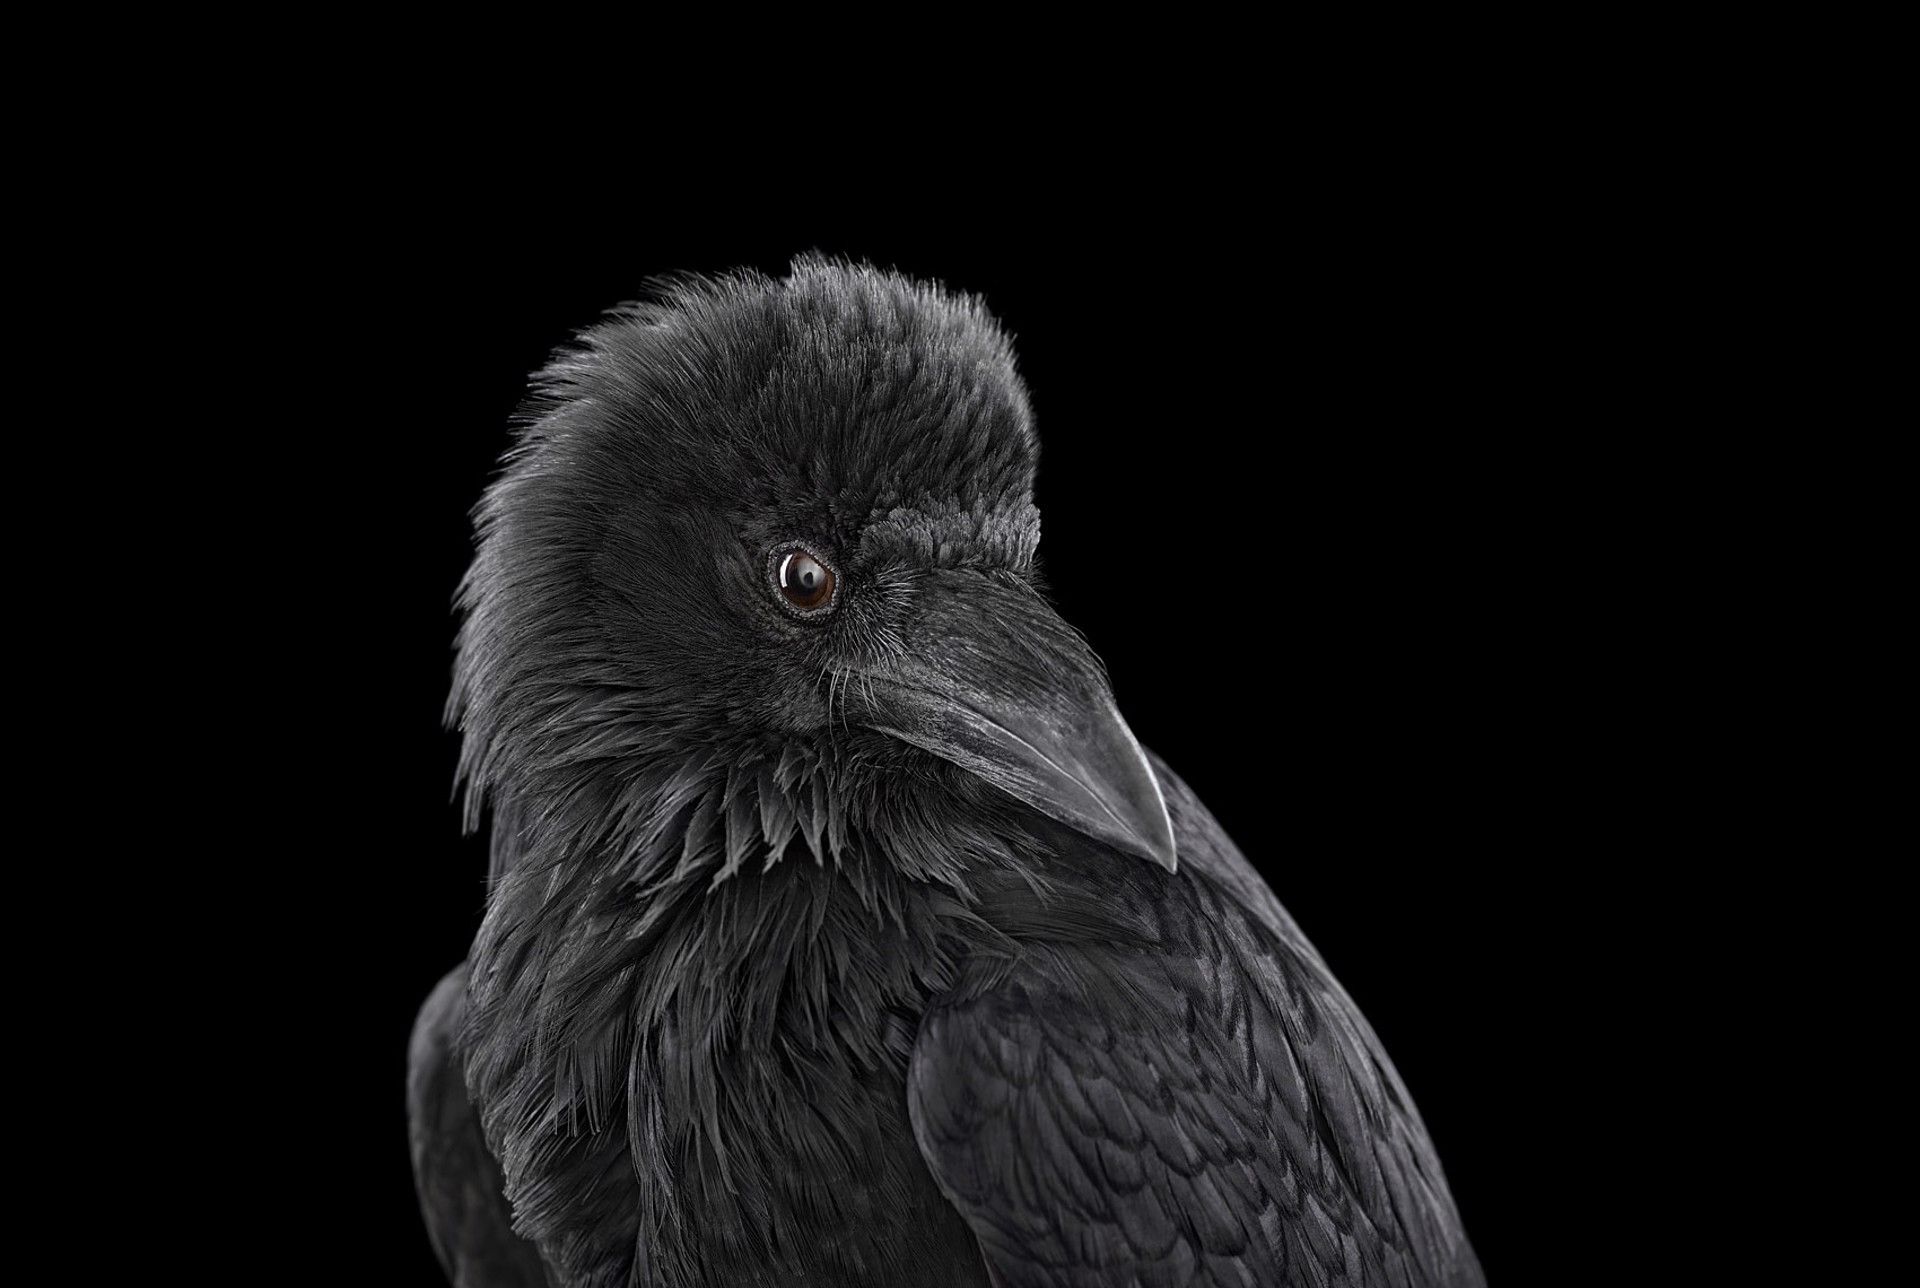 Raven #2 by Brad Wilson